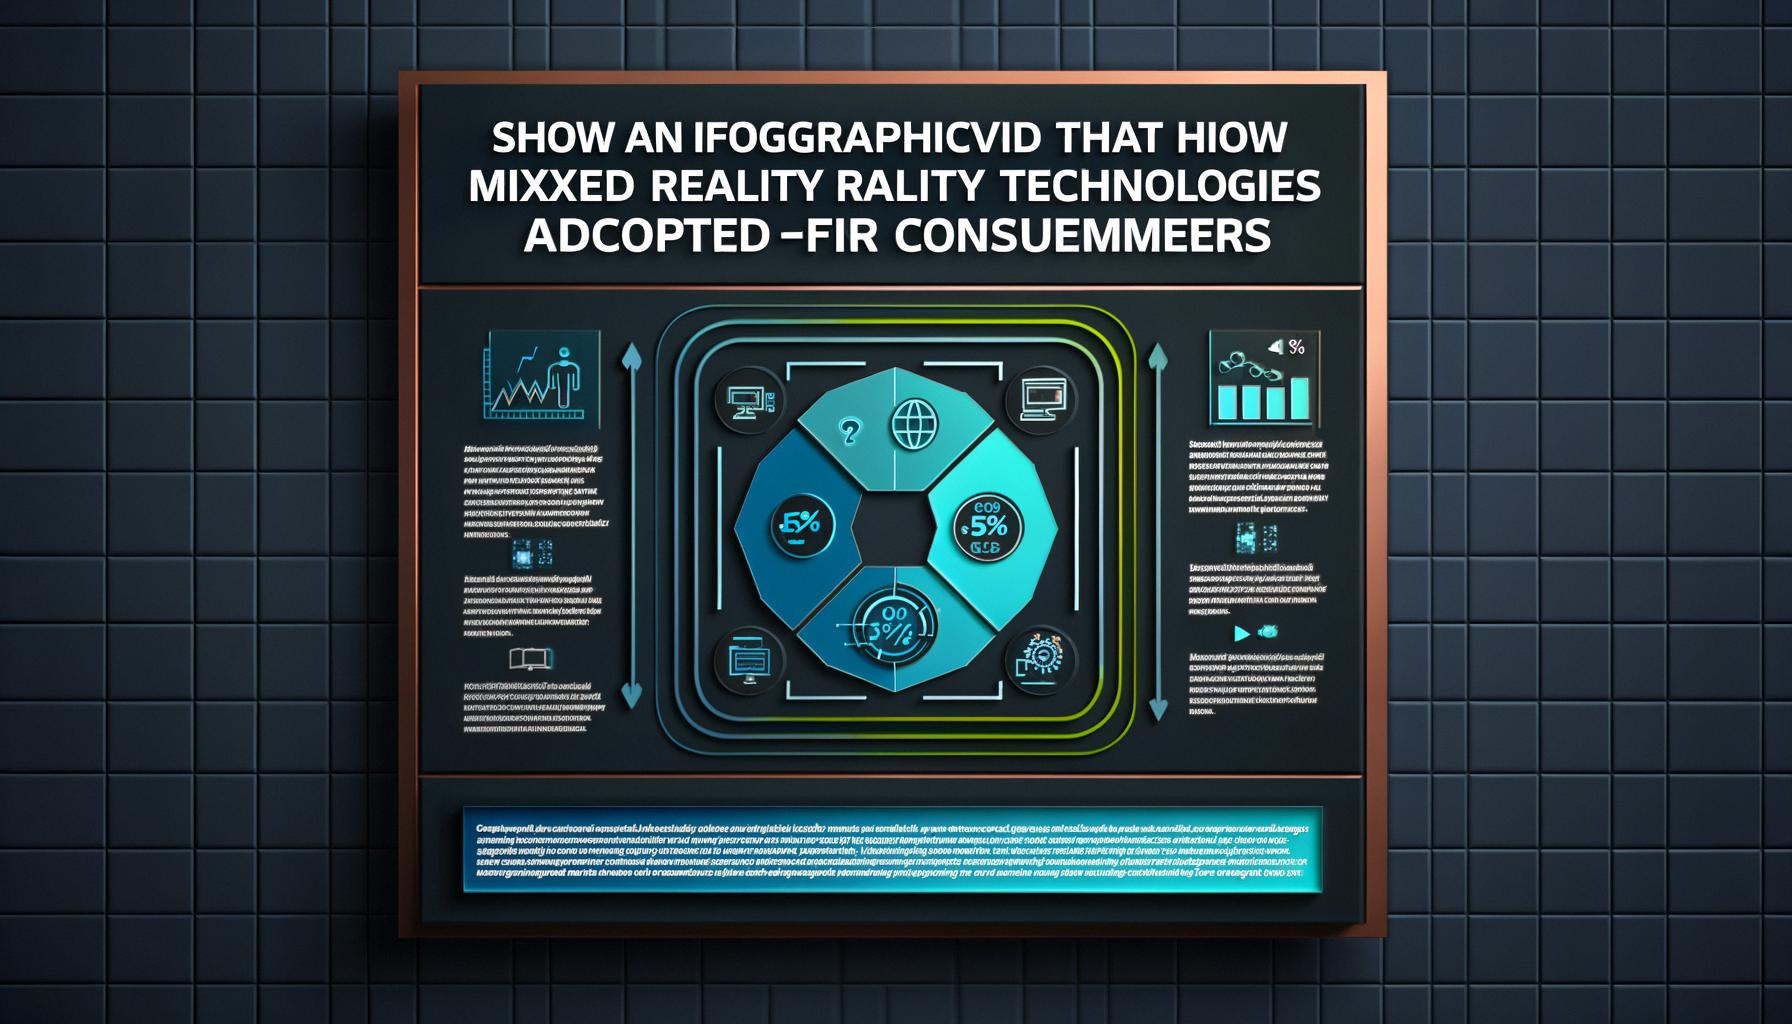 Mixed reality technologies face mixed consumer adoption and various strategic shifts Balanced News